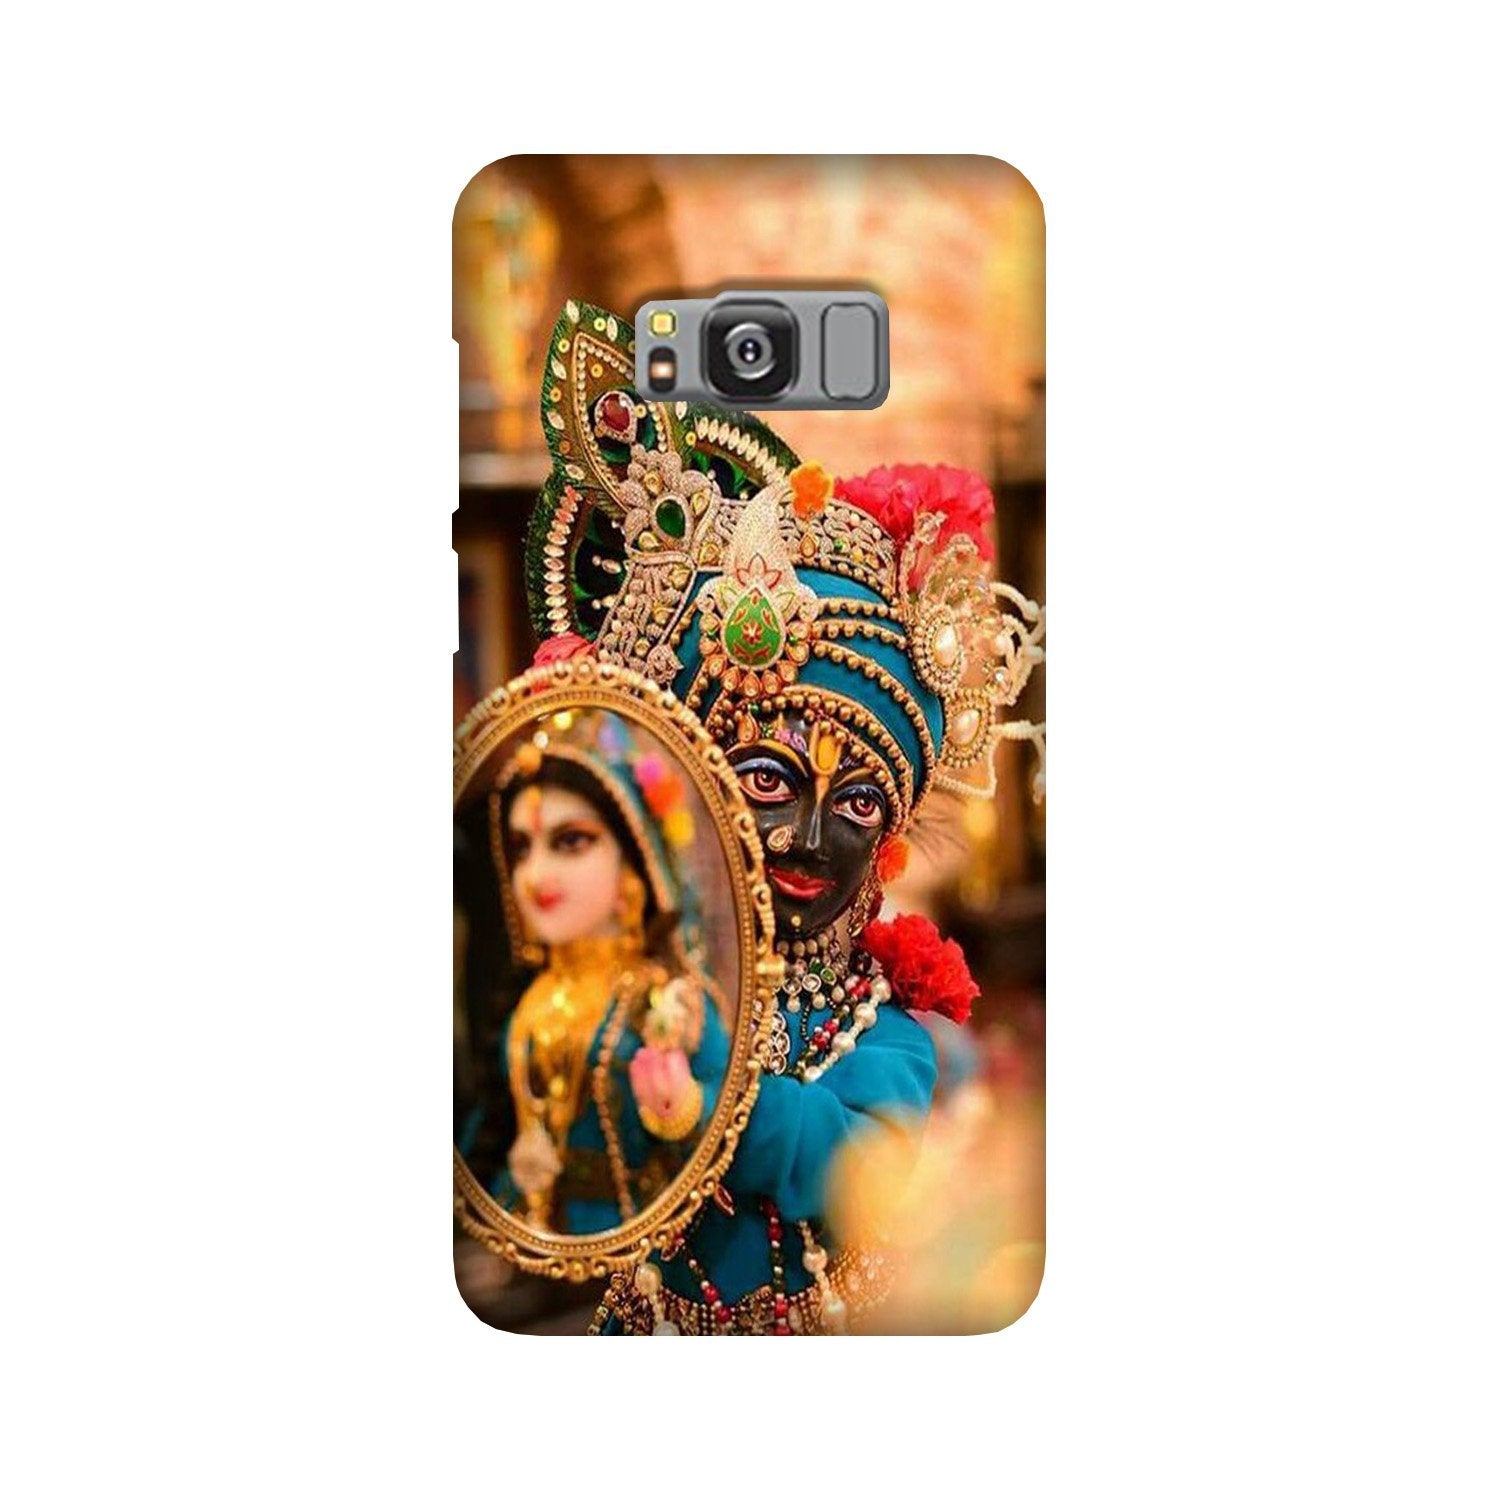 Lord Krishna5 Case for Galaxy S8